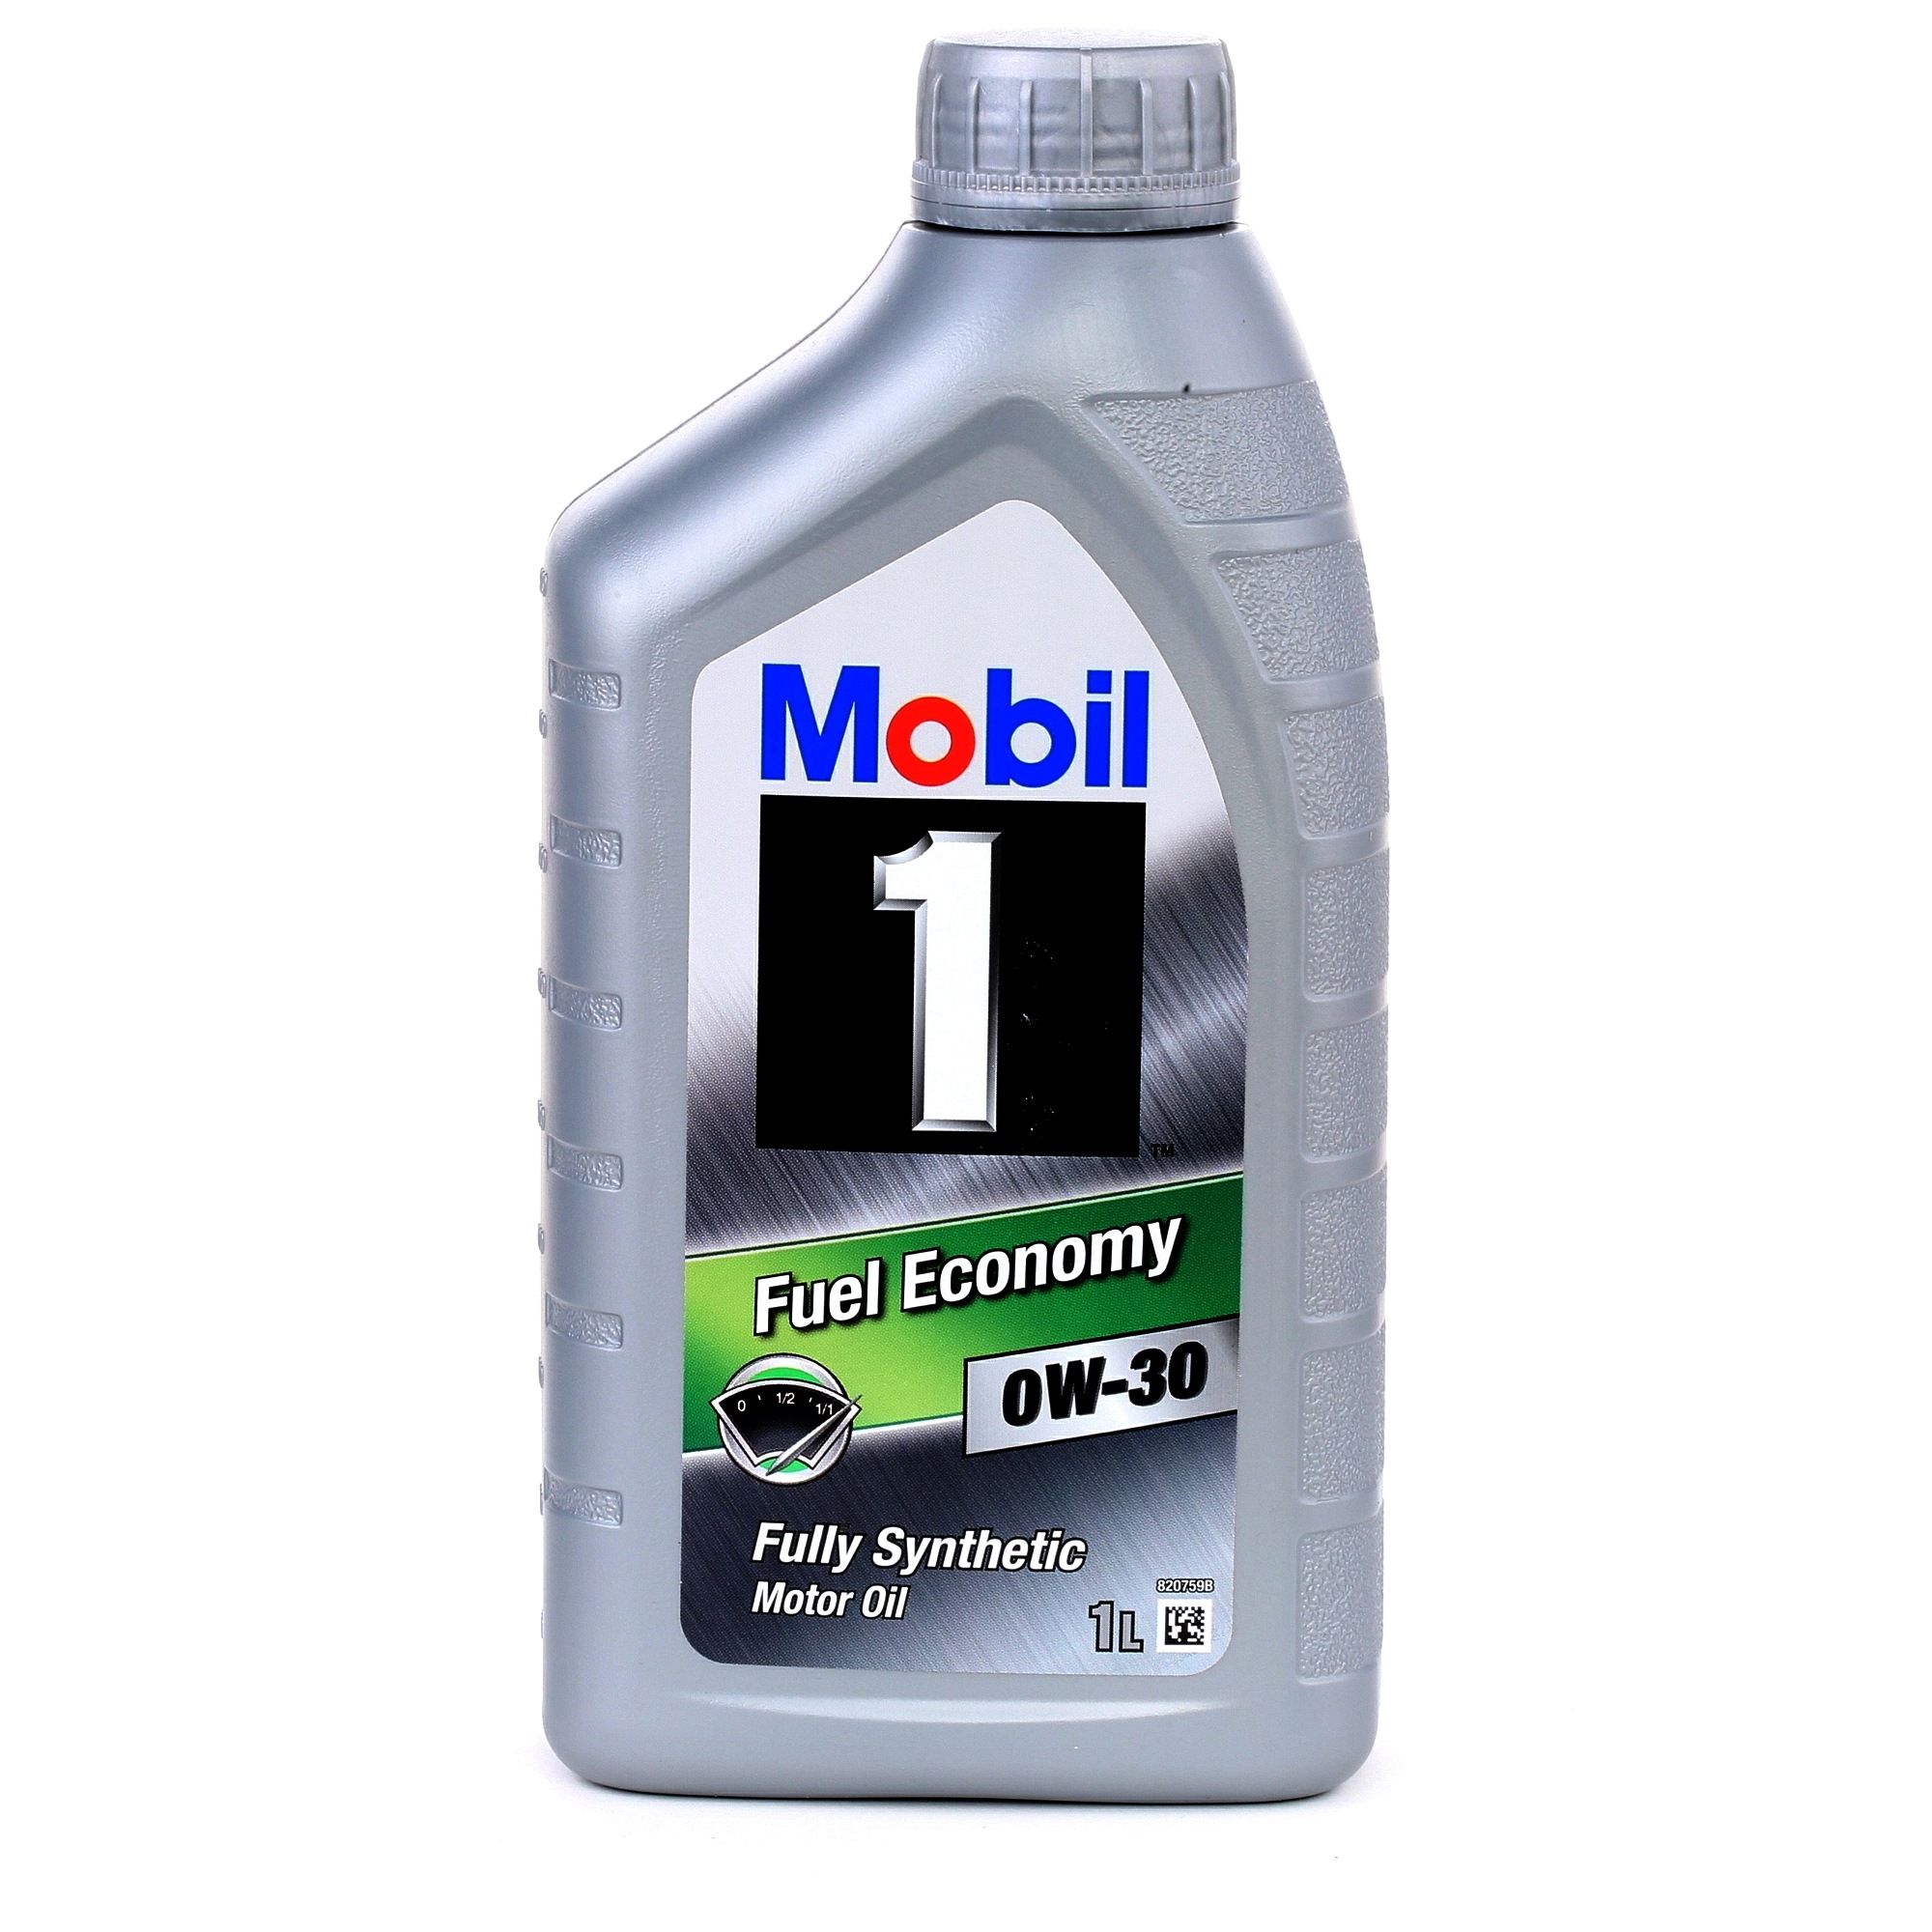 APICF MOBIL 1, Fuel Economy 0W-30, 1l, Synthetiköl Motoröl 151065 günstig